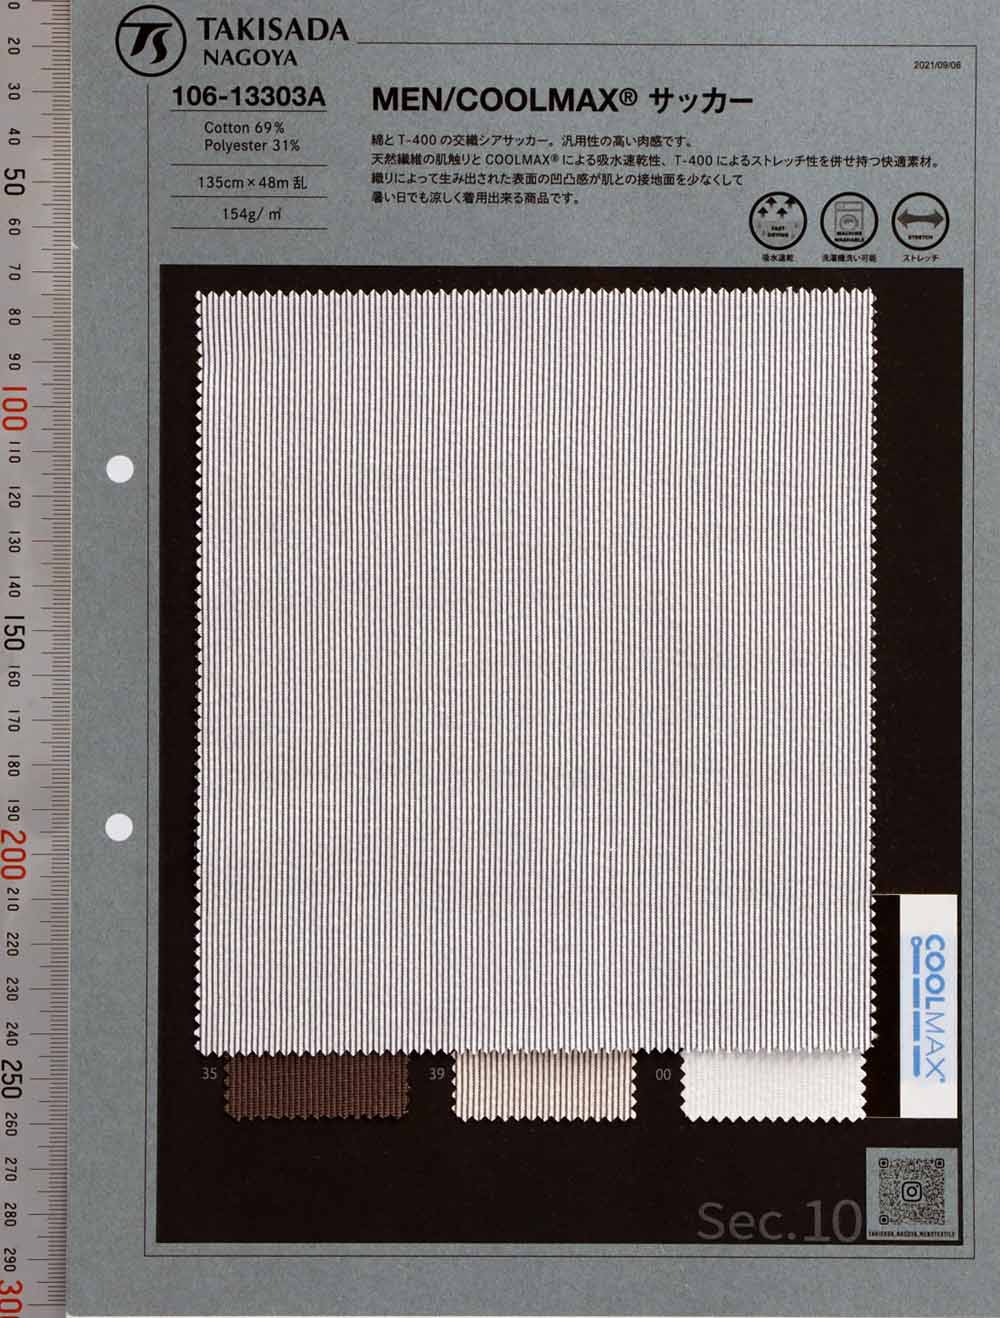 106-13303A HOMBRE / COOLMAX® Cordlane Seersucker[Fabrica Textil] Takisada Nagoya